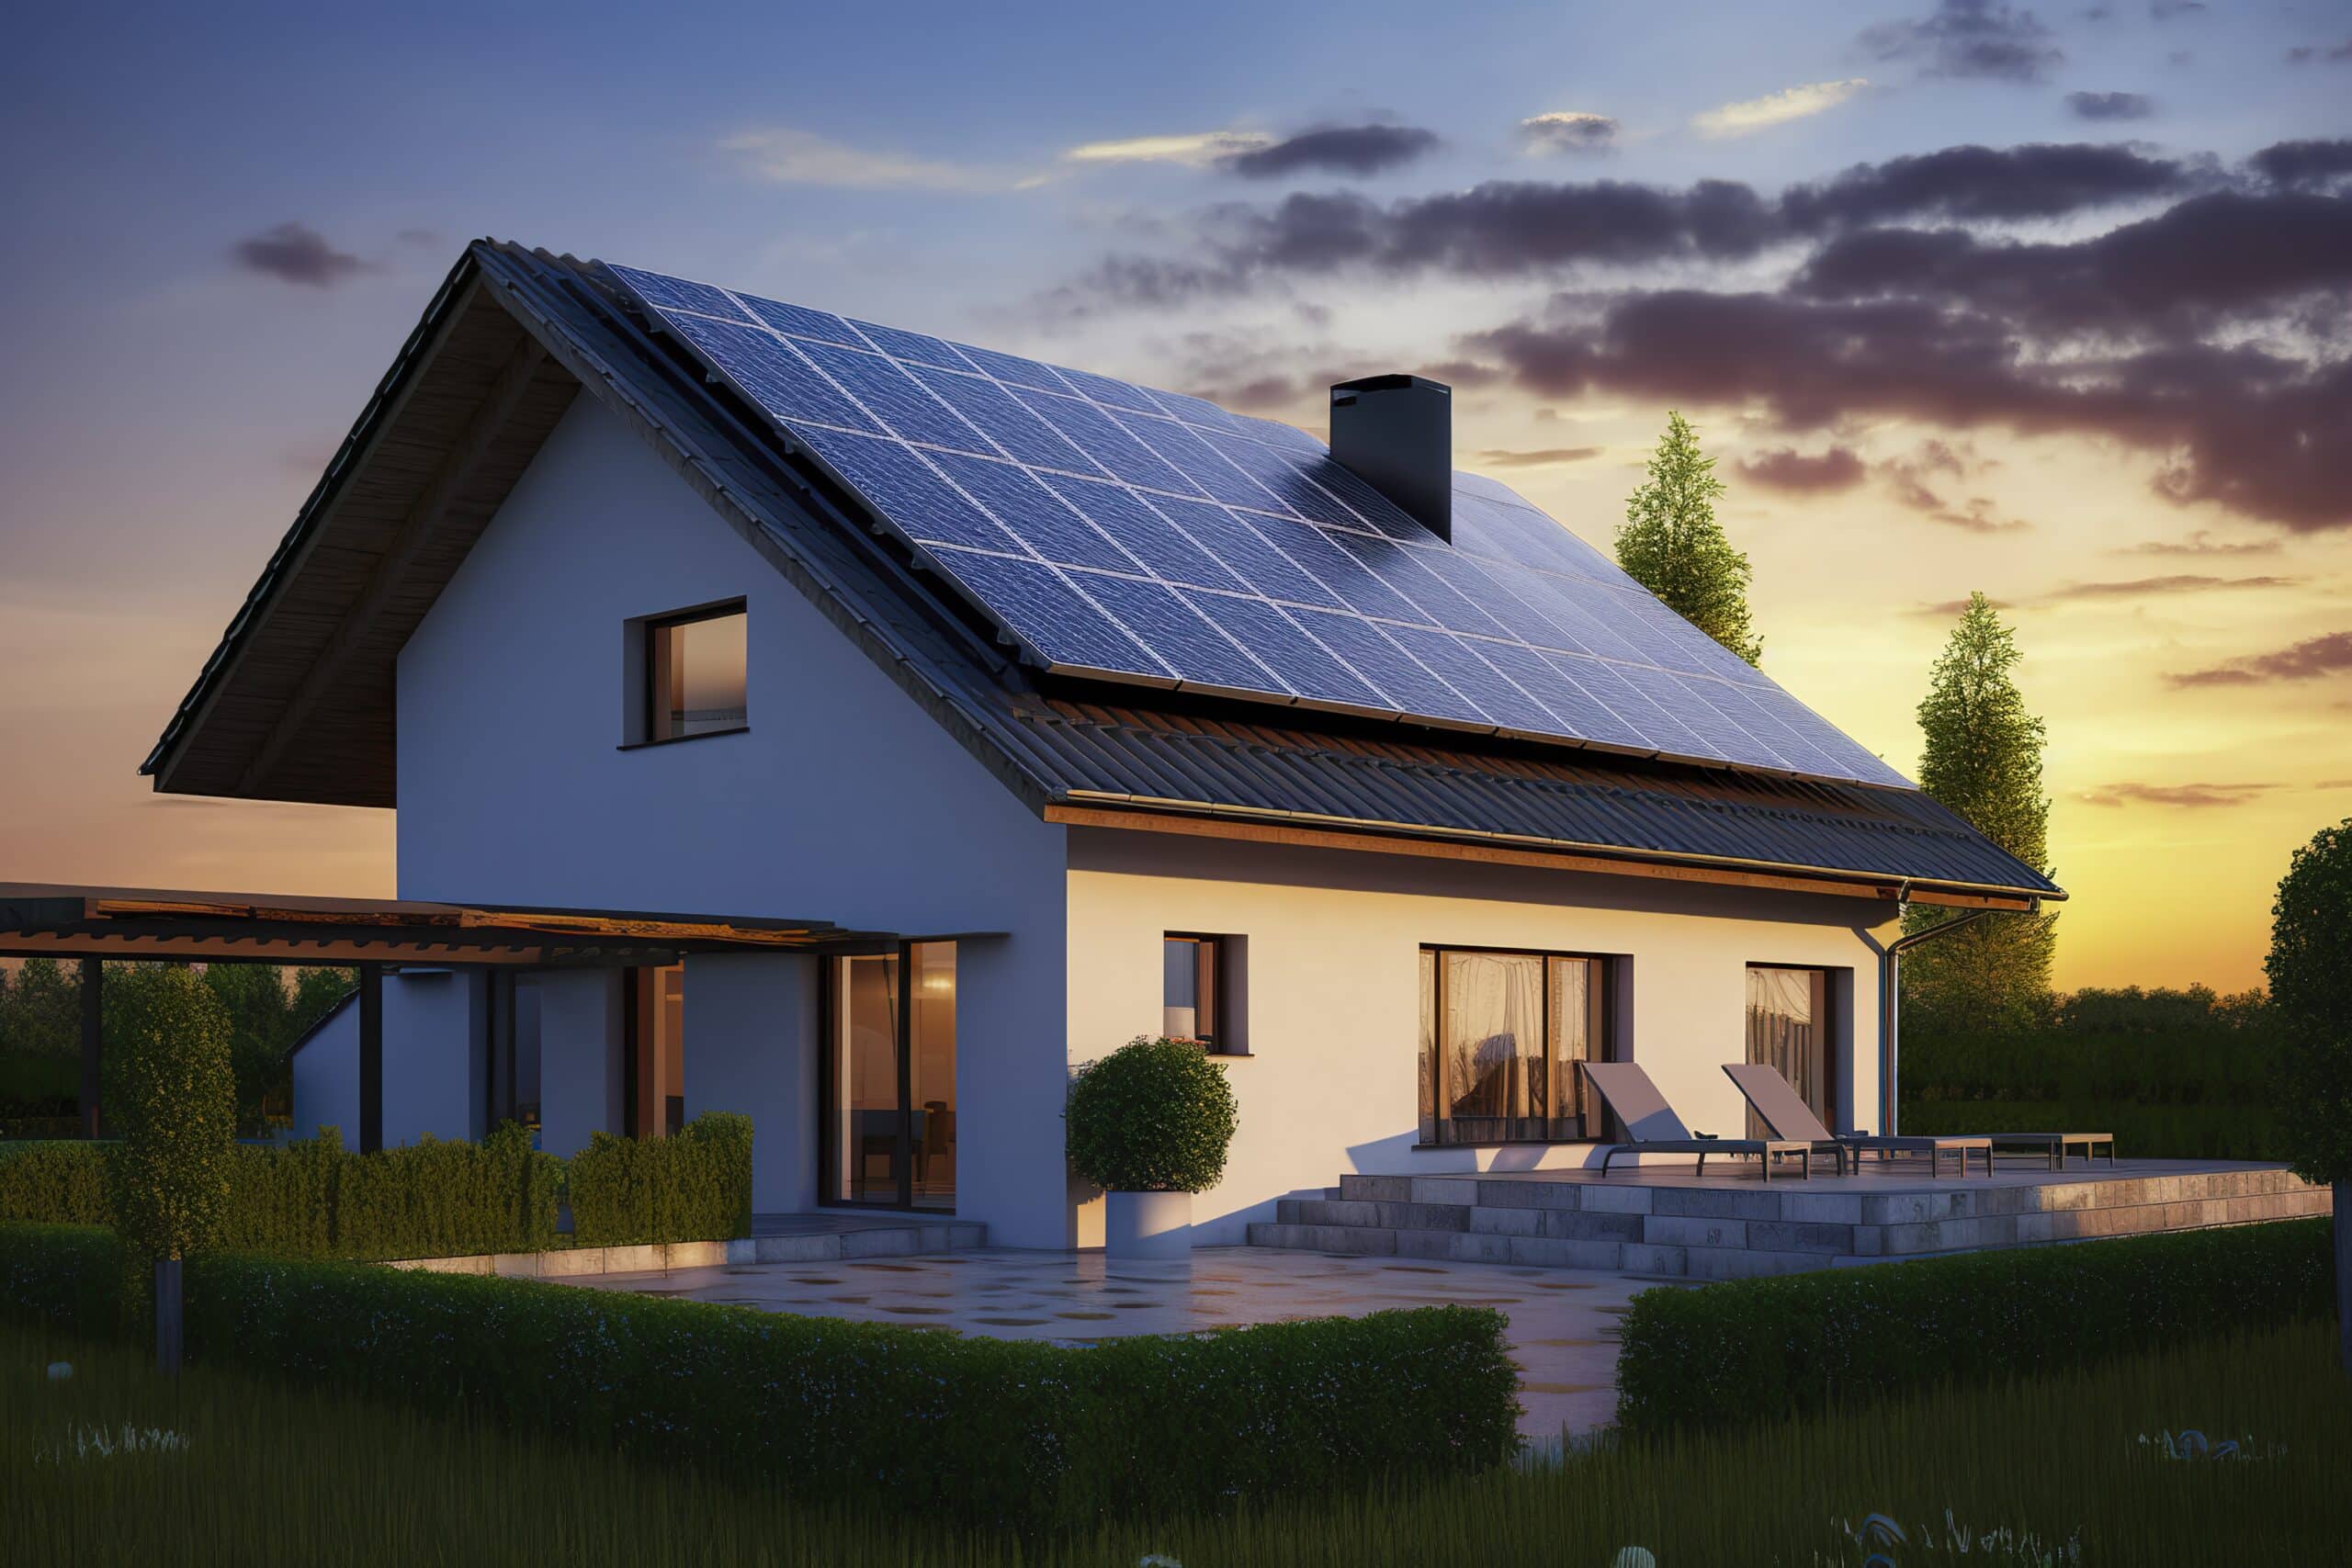 www.appr.com : Minimum solar generator size for a house?